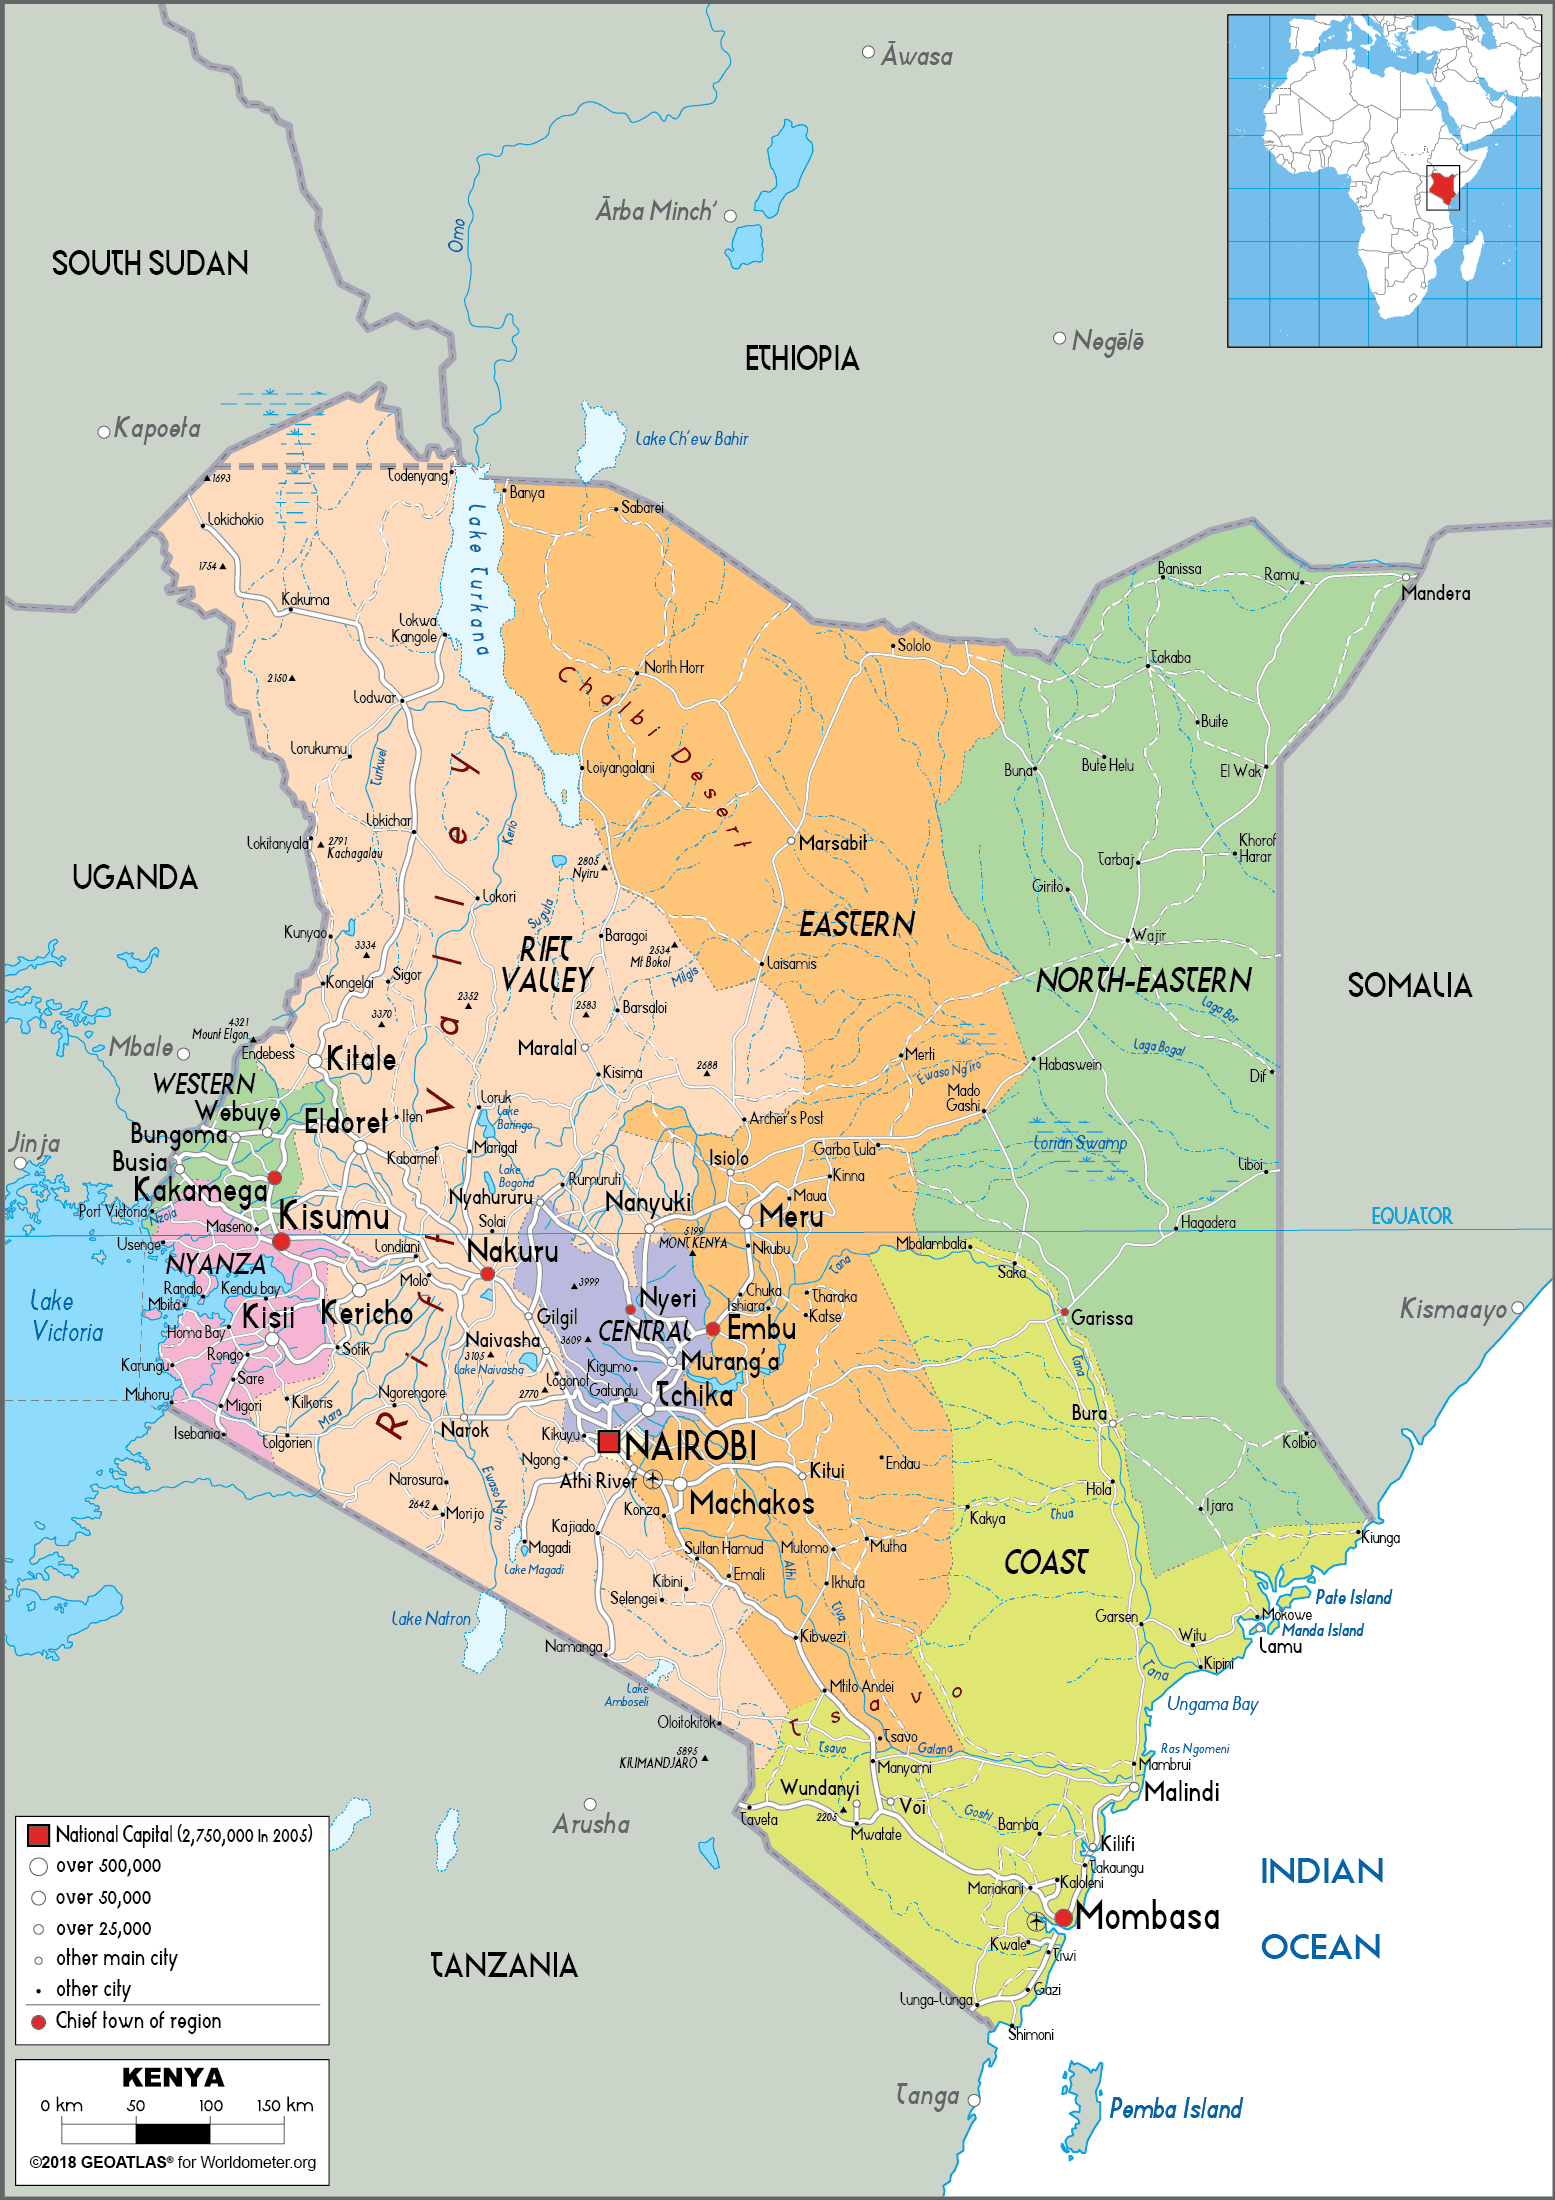 Large size Political Map of Kenya - Worldometer